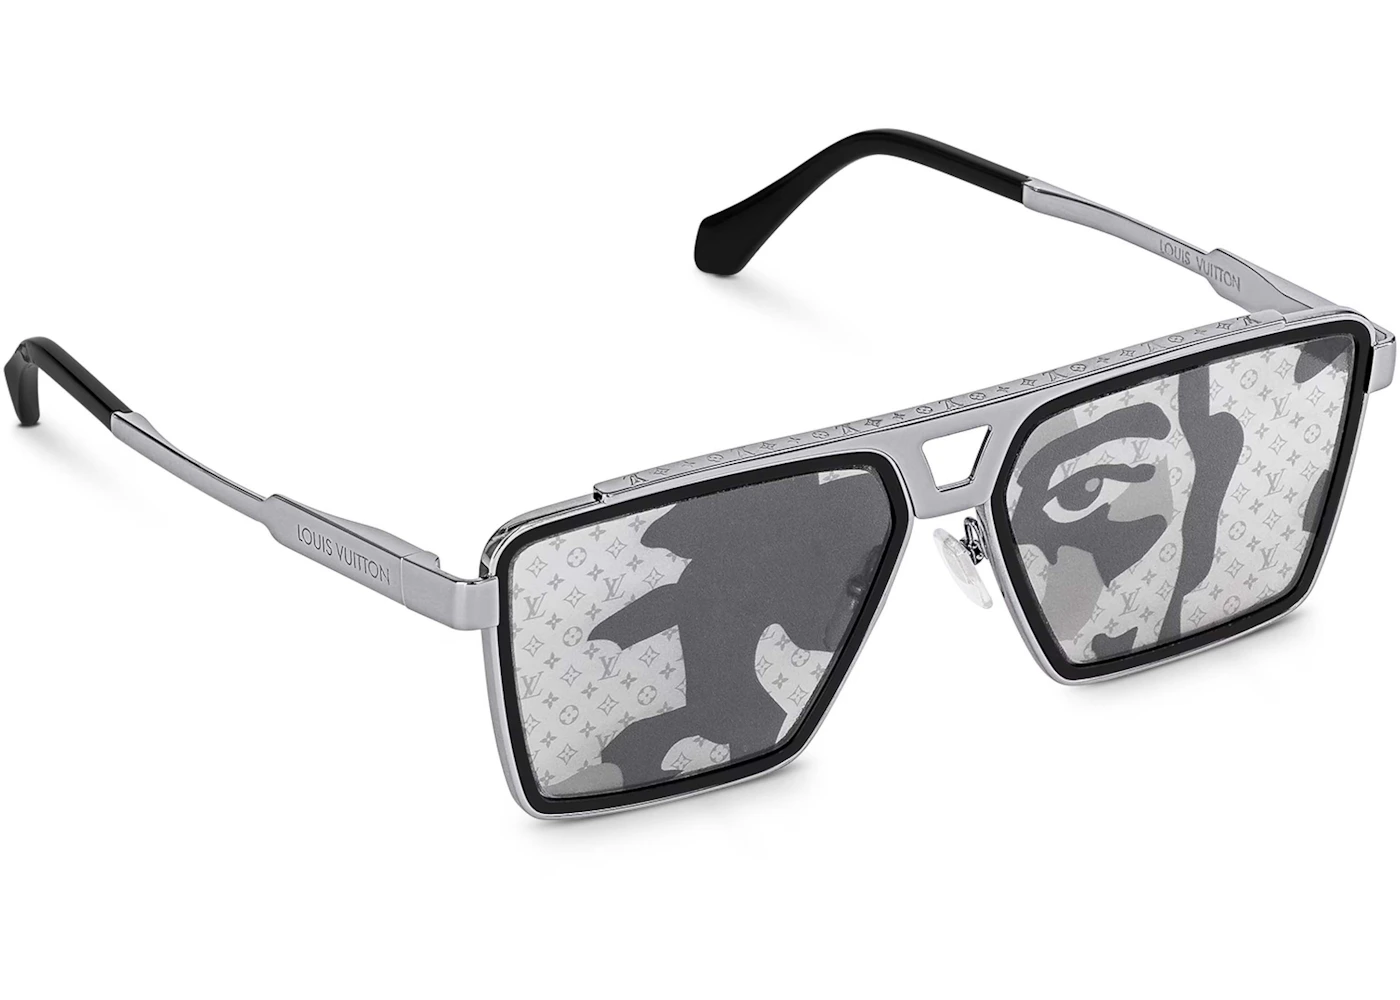 Louis Vuitton Cyclone Metal Sunglasses Black Metal. Size U